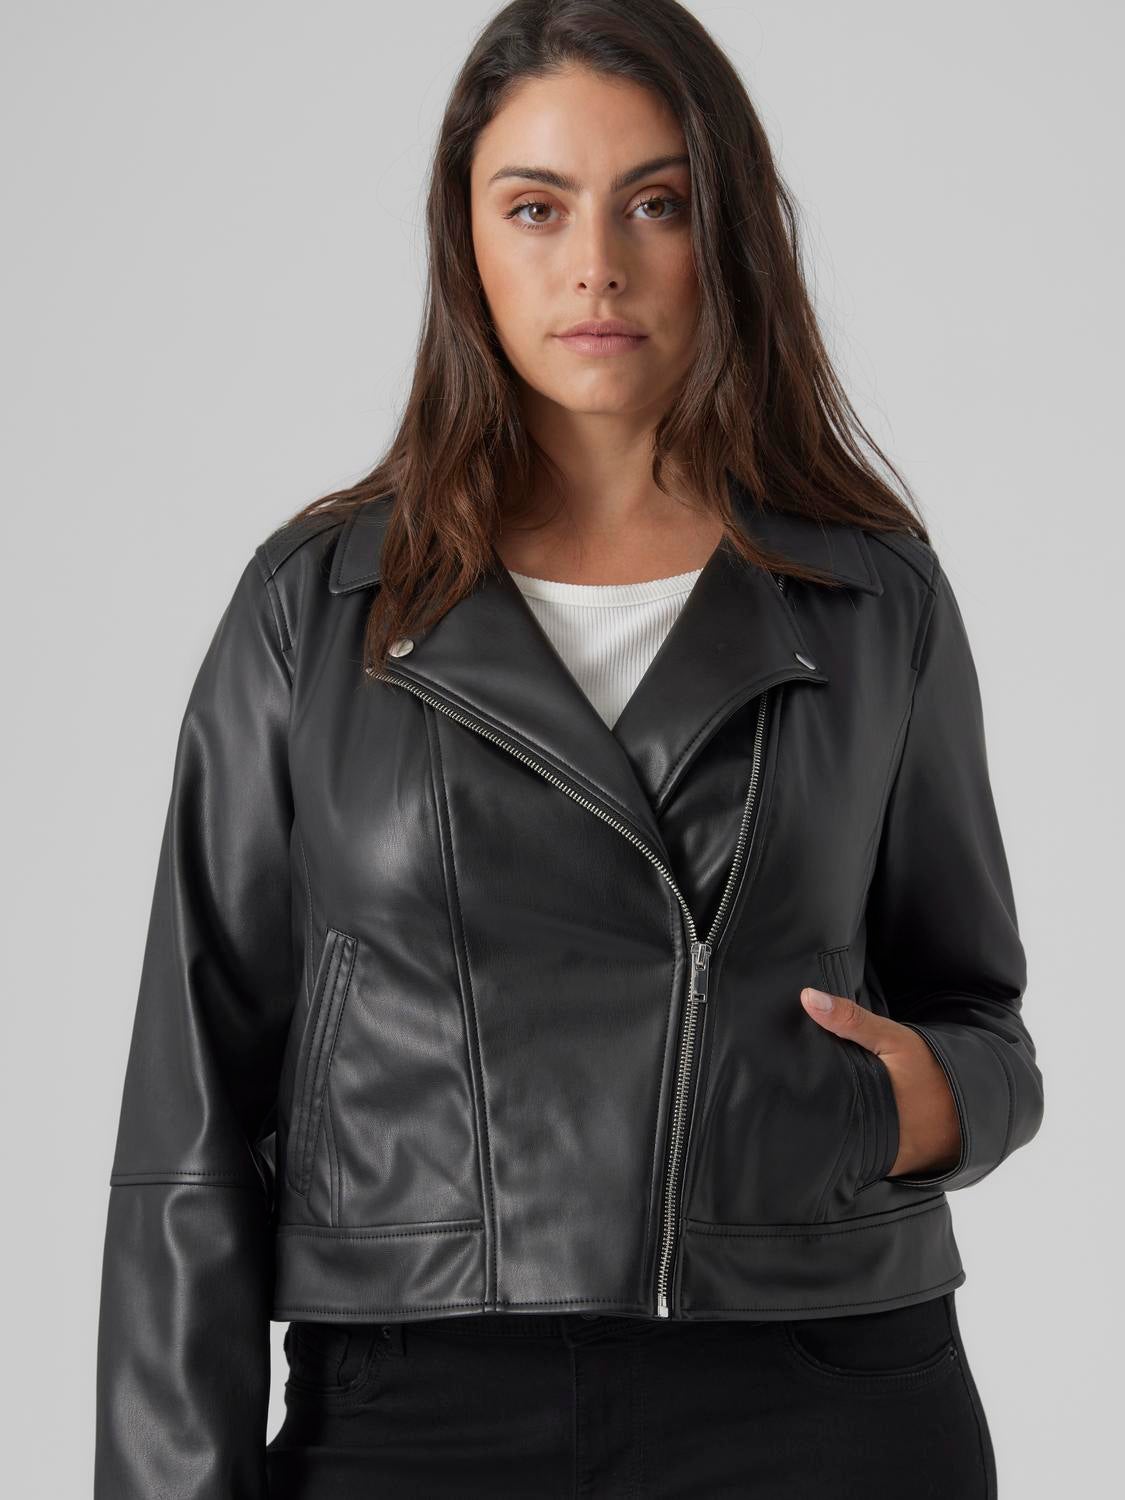 Vero Moda Leather Jacket New NWT 175/92A XL | eBay